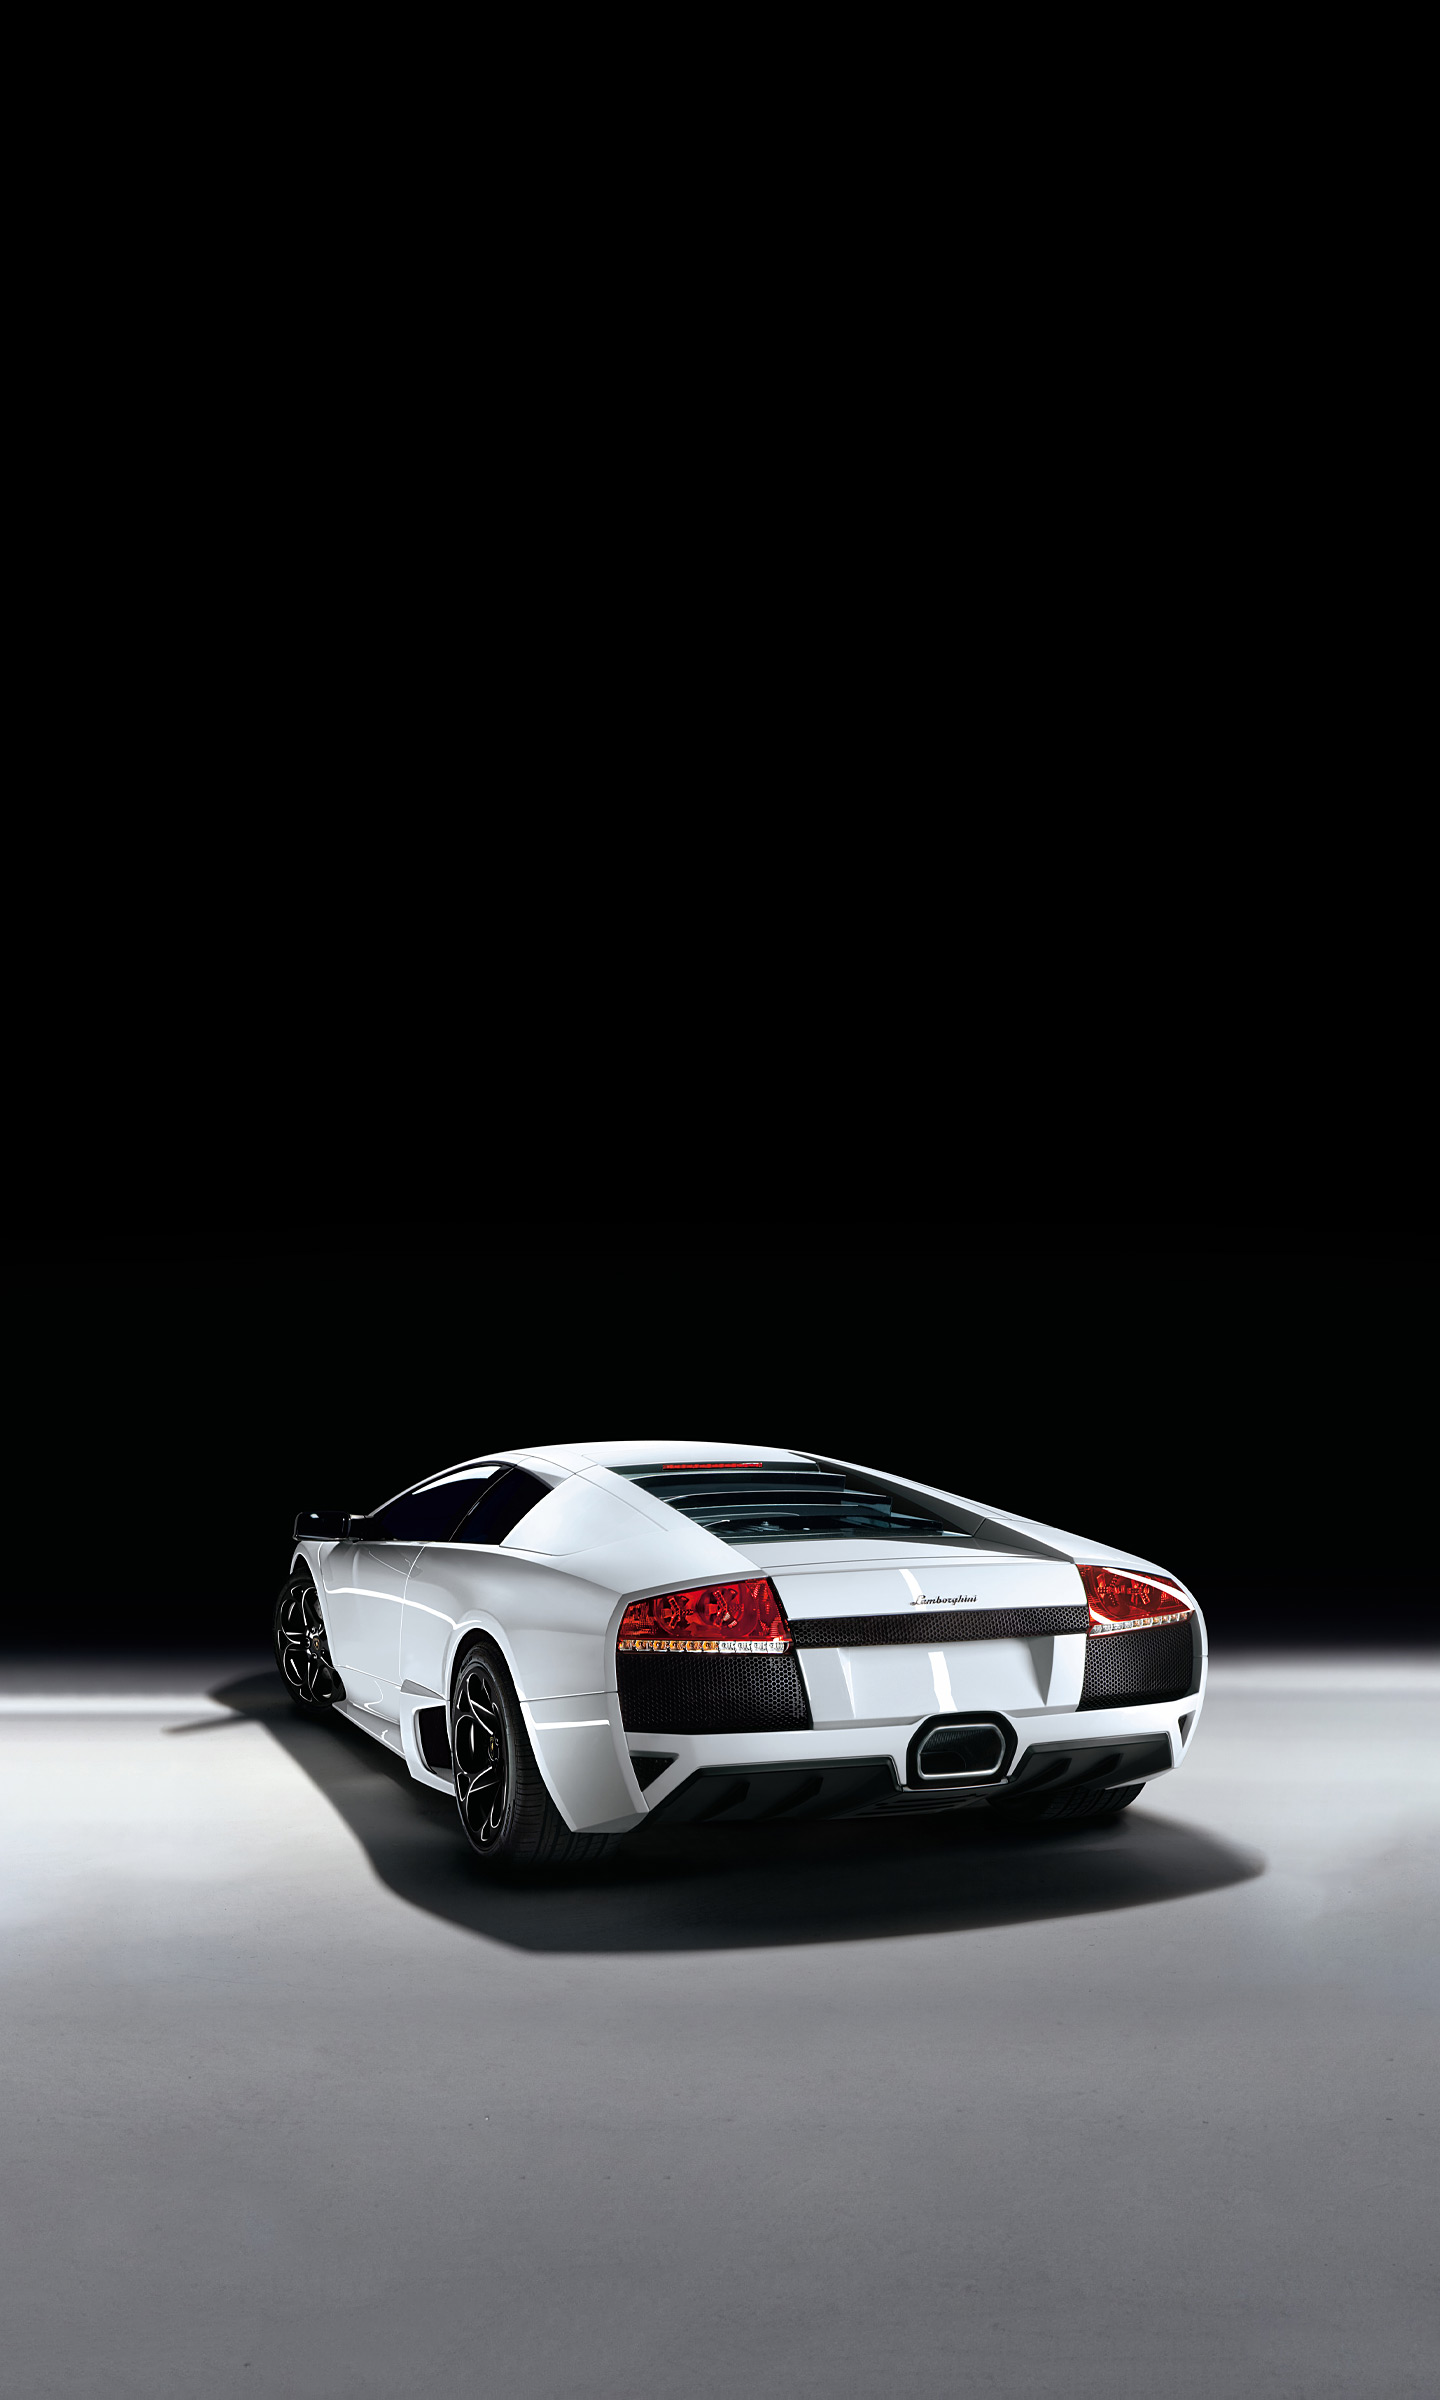  2007 Lamborghini Murcielago LP640 Versace Wallpaper.